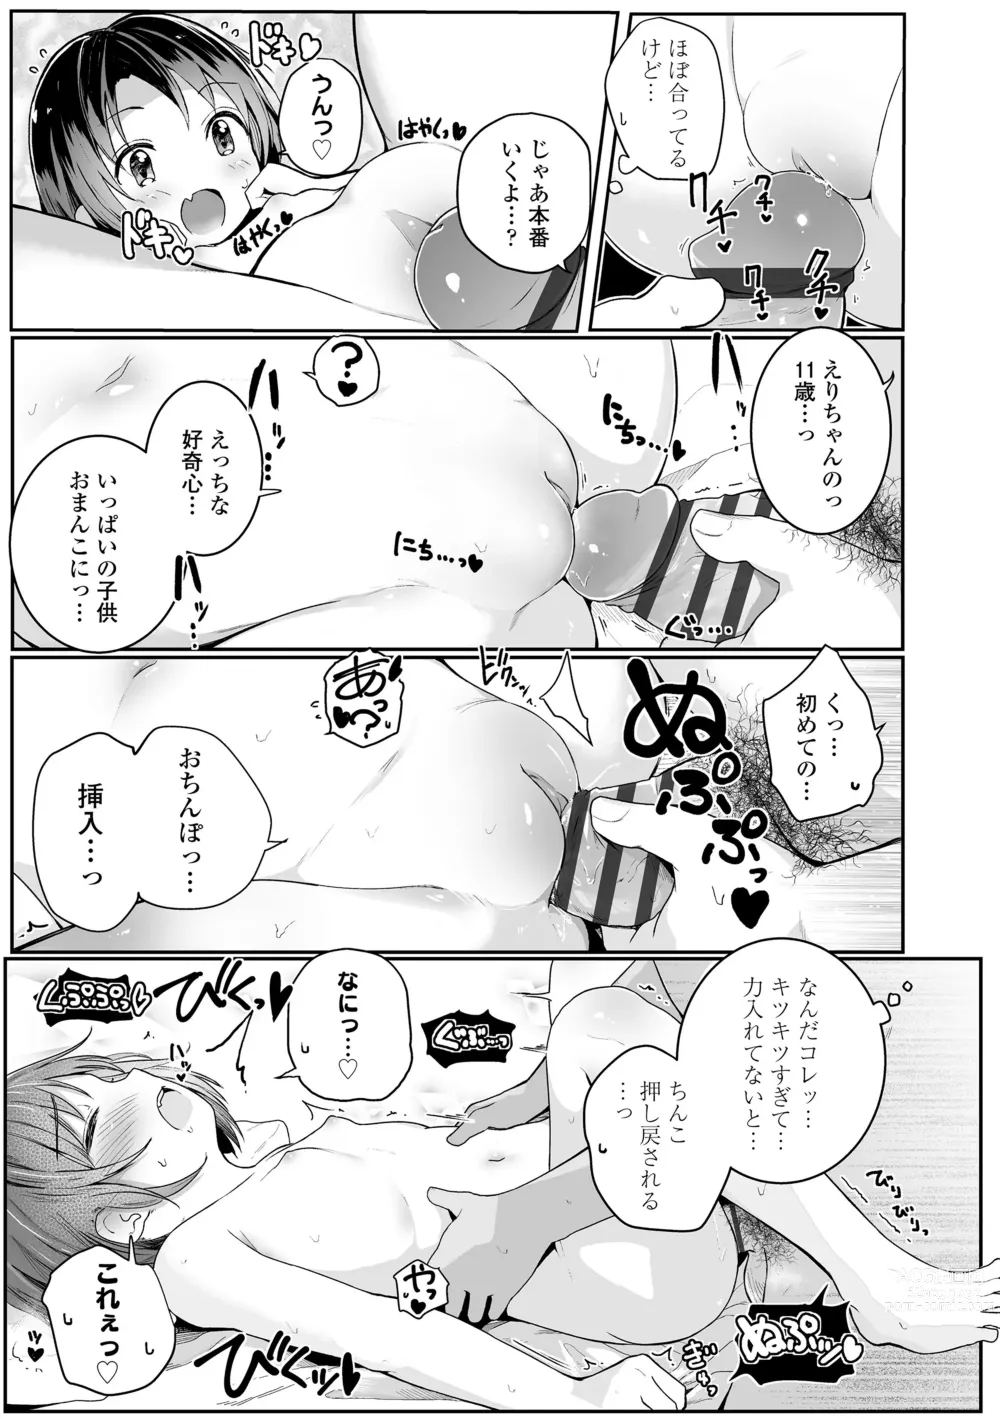 Page 19 of manga Chiisai Houga H Desho